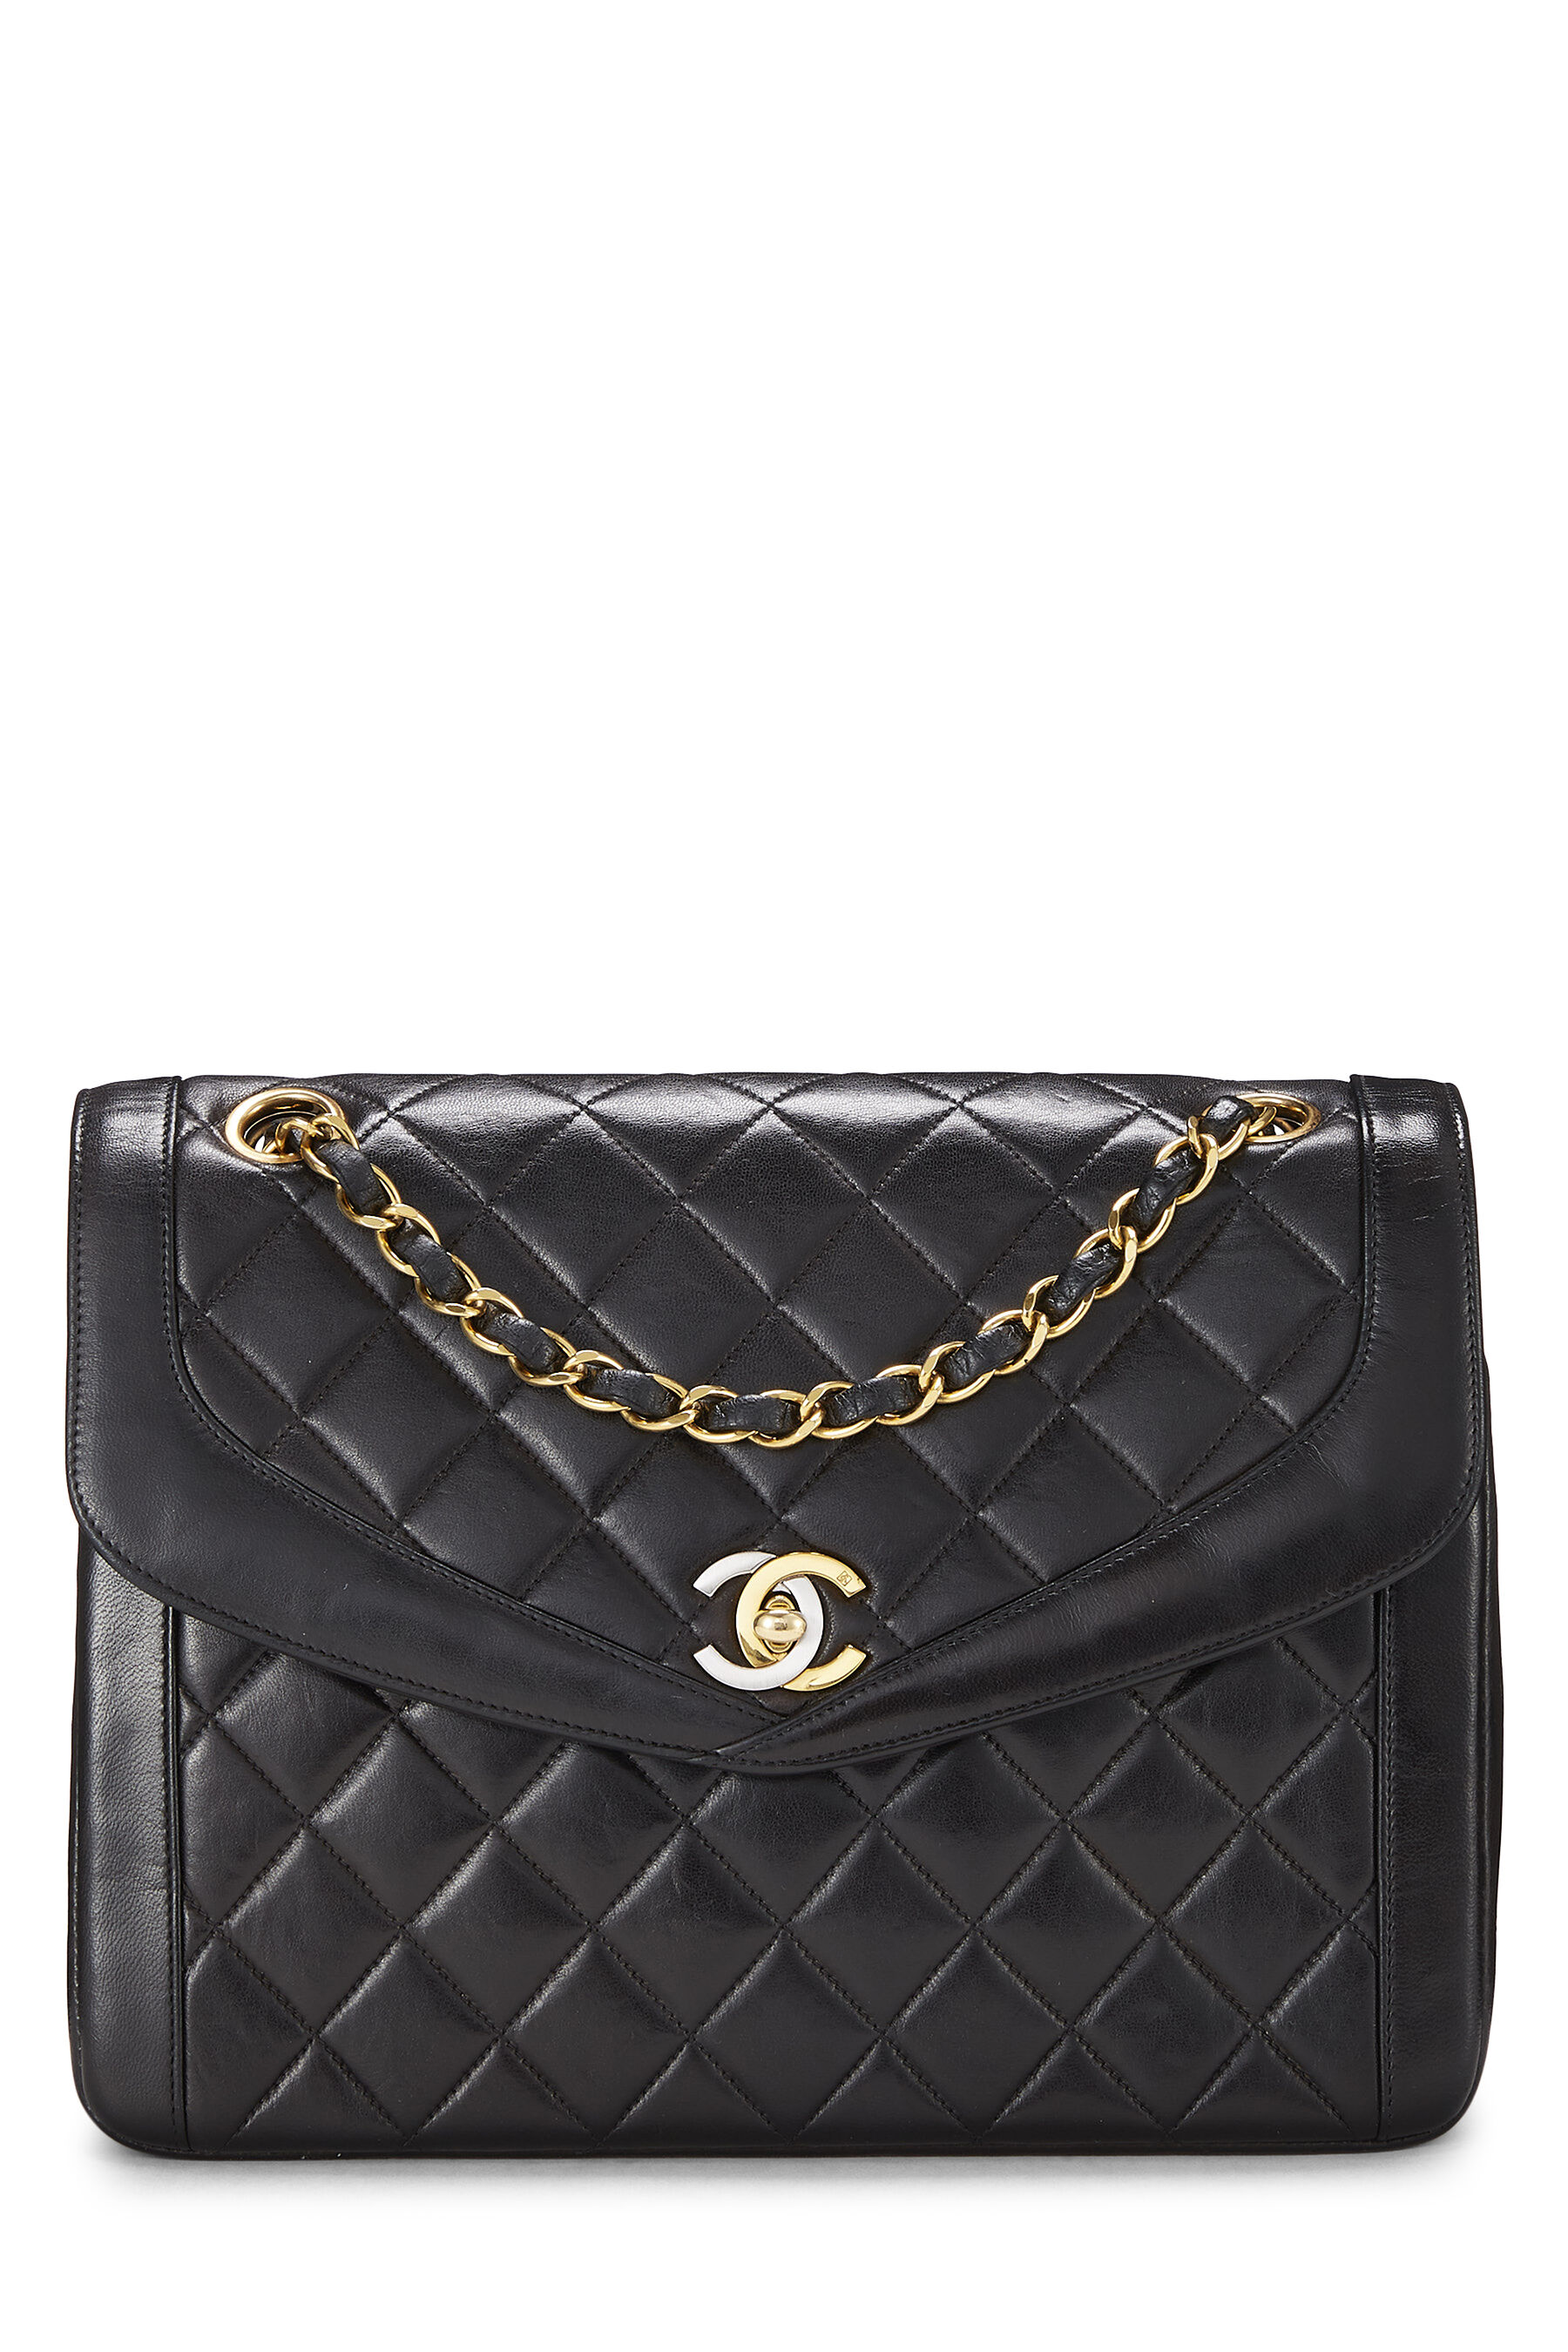 Chanel Black Quilted Lambskin Paris Limited Flap Small Q6B02P1IK1017